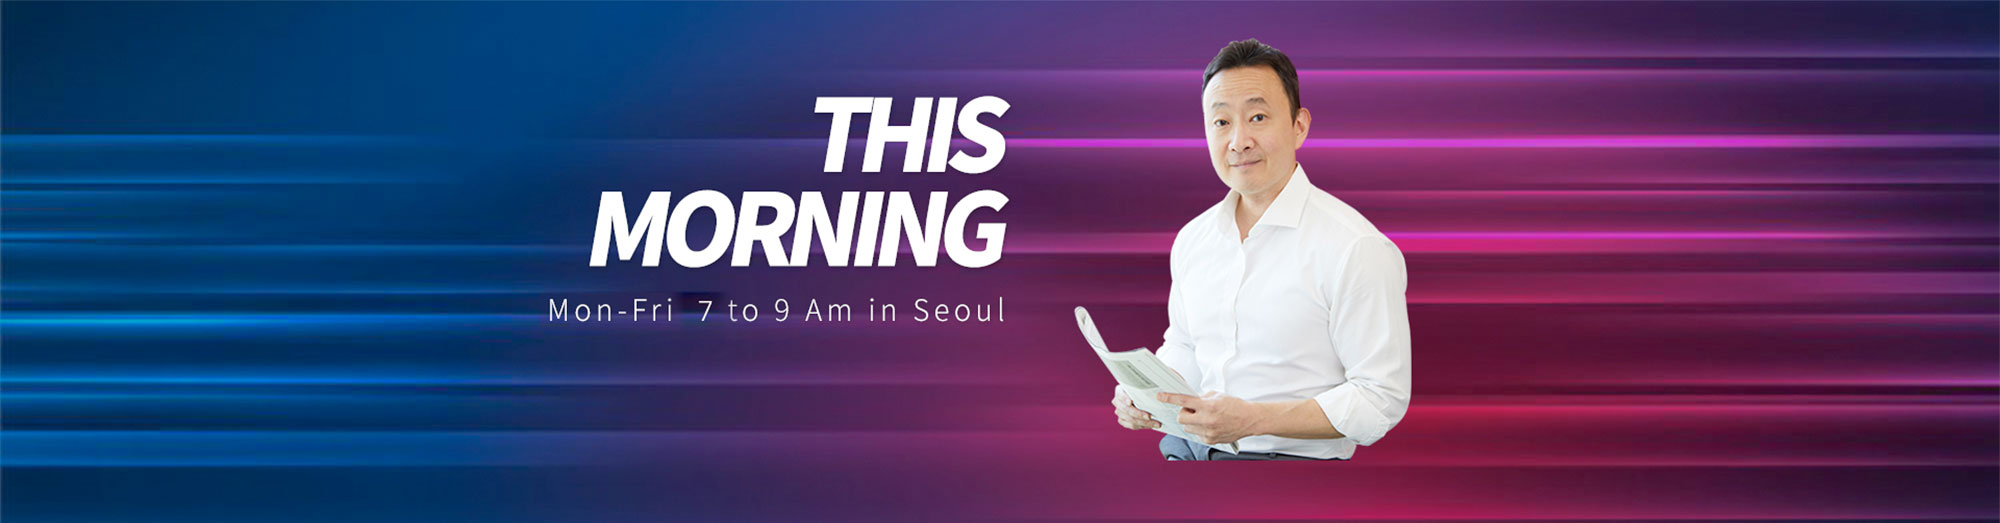 Dr. Han Interview – TBS eFM, Seoul